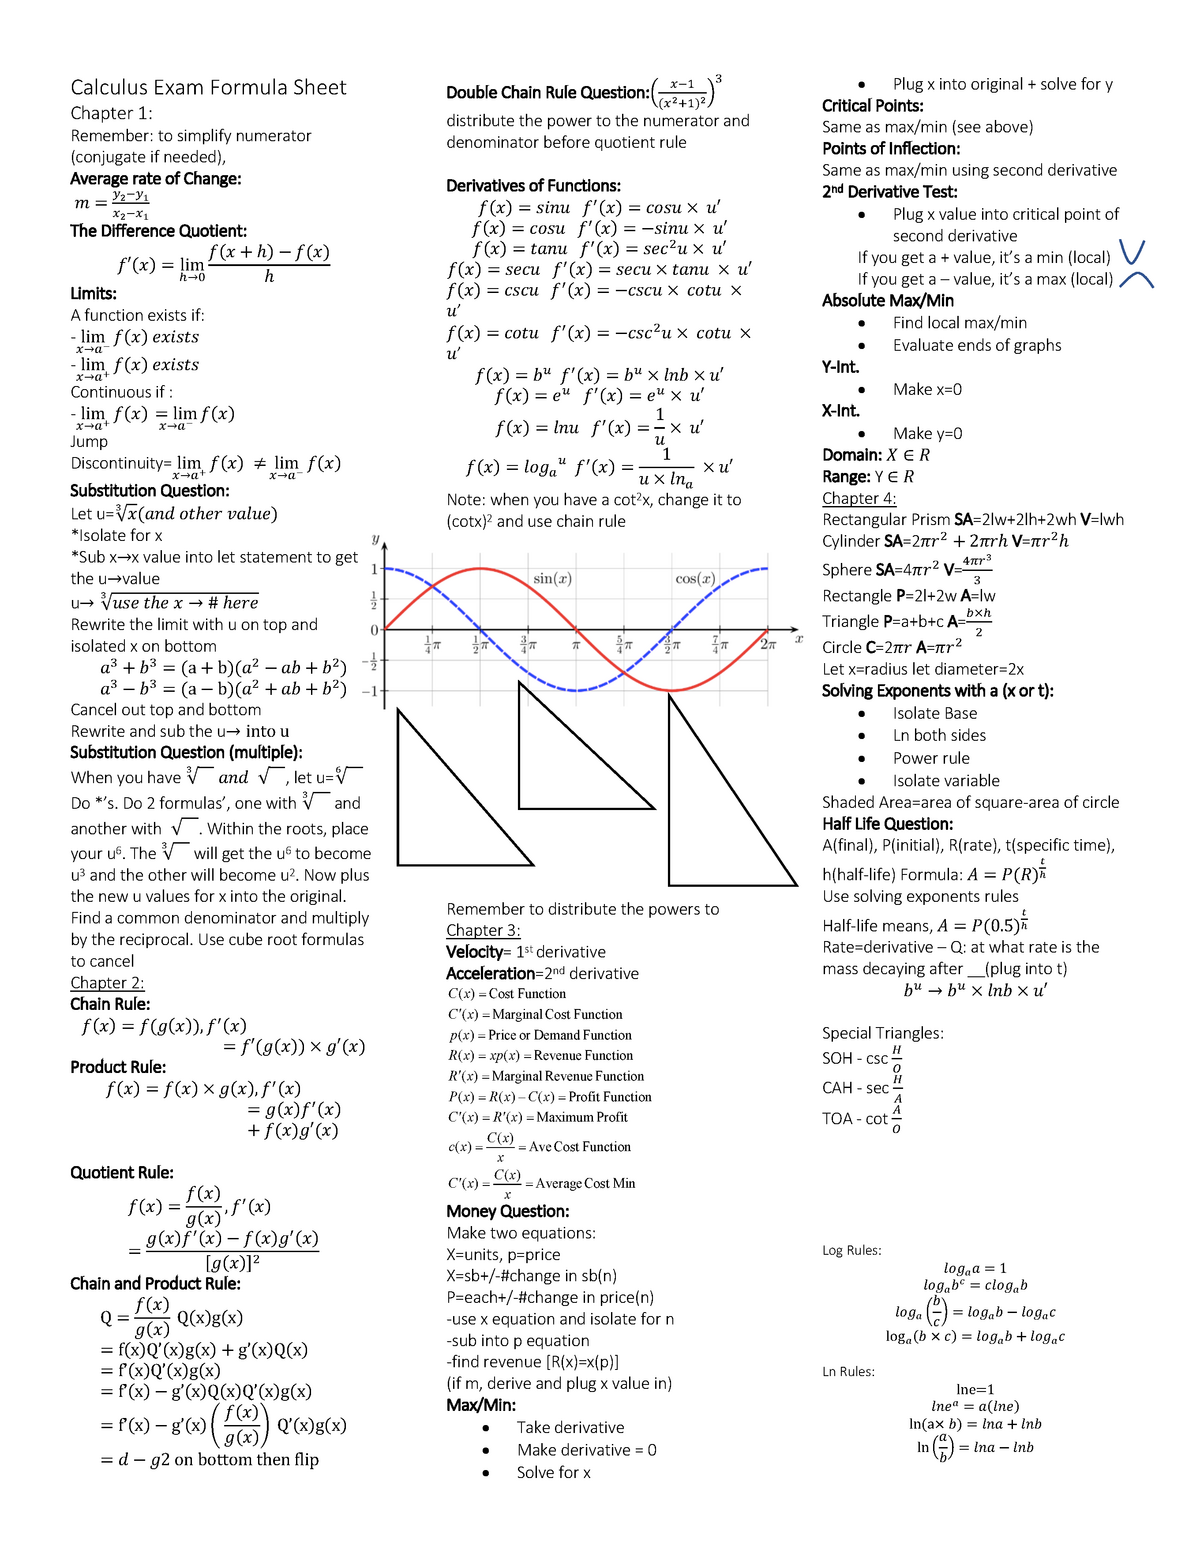 Calculus Exam Formula Sheet Ma129 Wlu Studocu